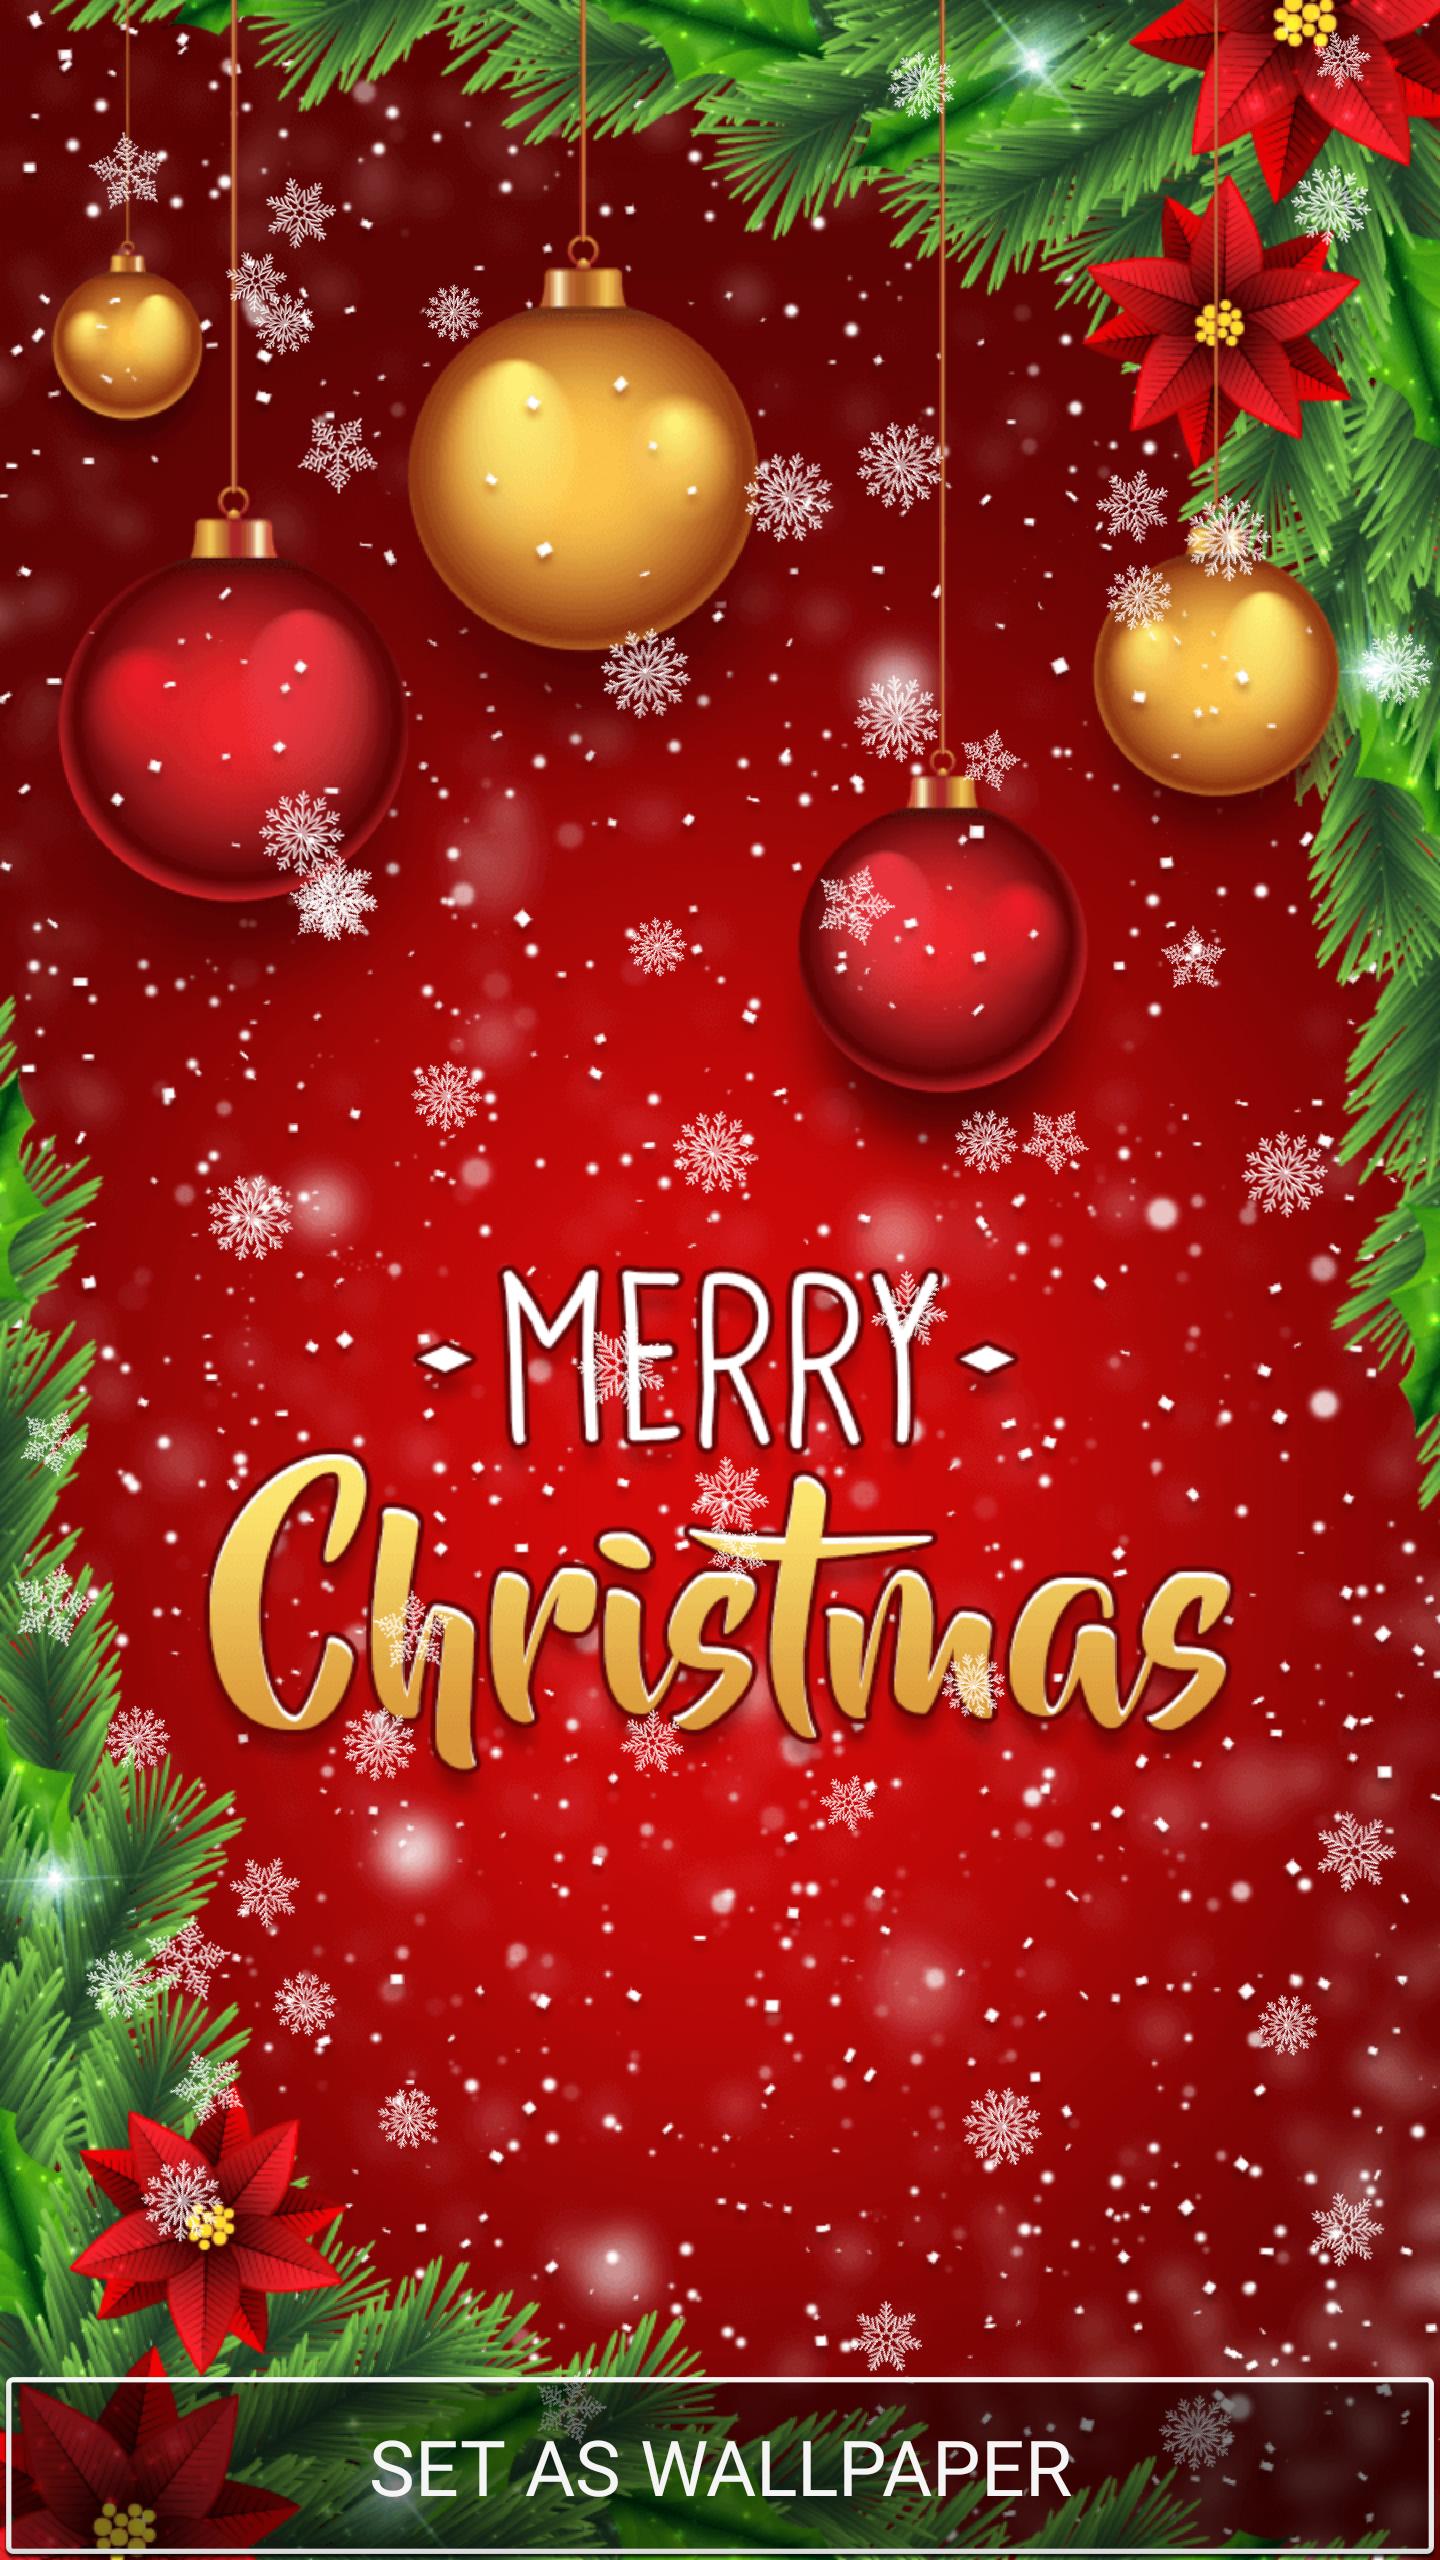 Sfondi Natalizi Gratis.Sfondi Animati Natale Gratis For Android Apk Download